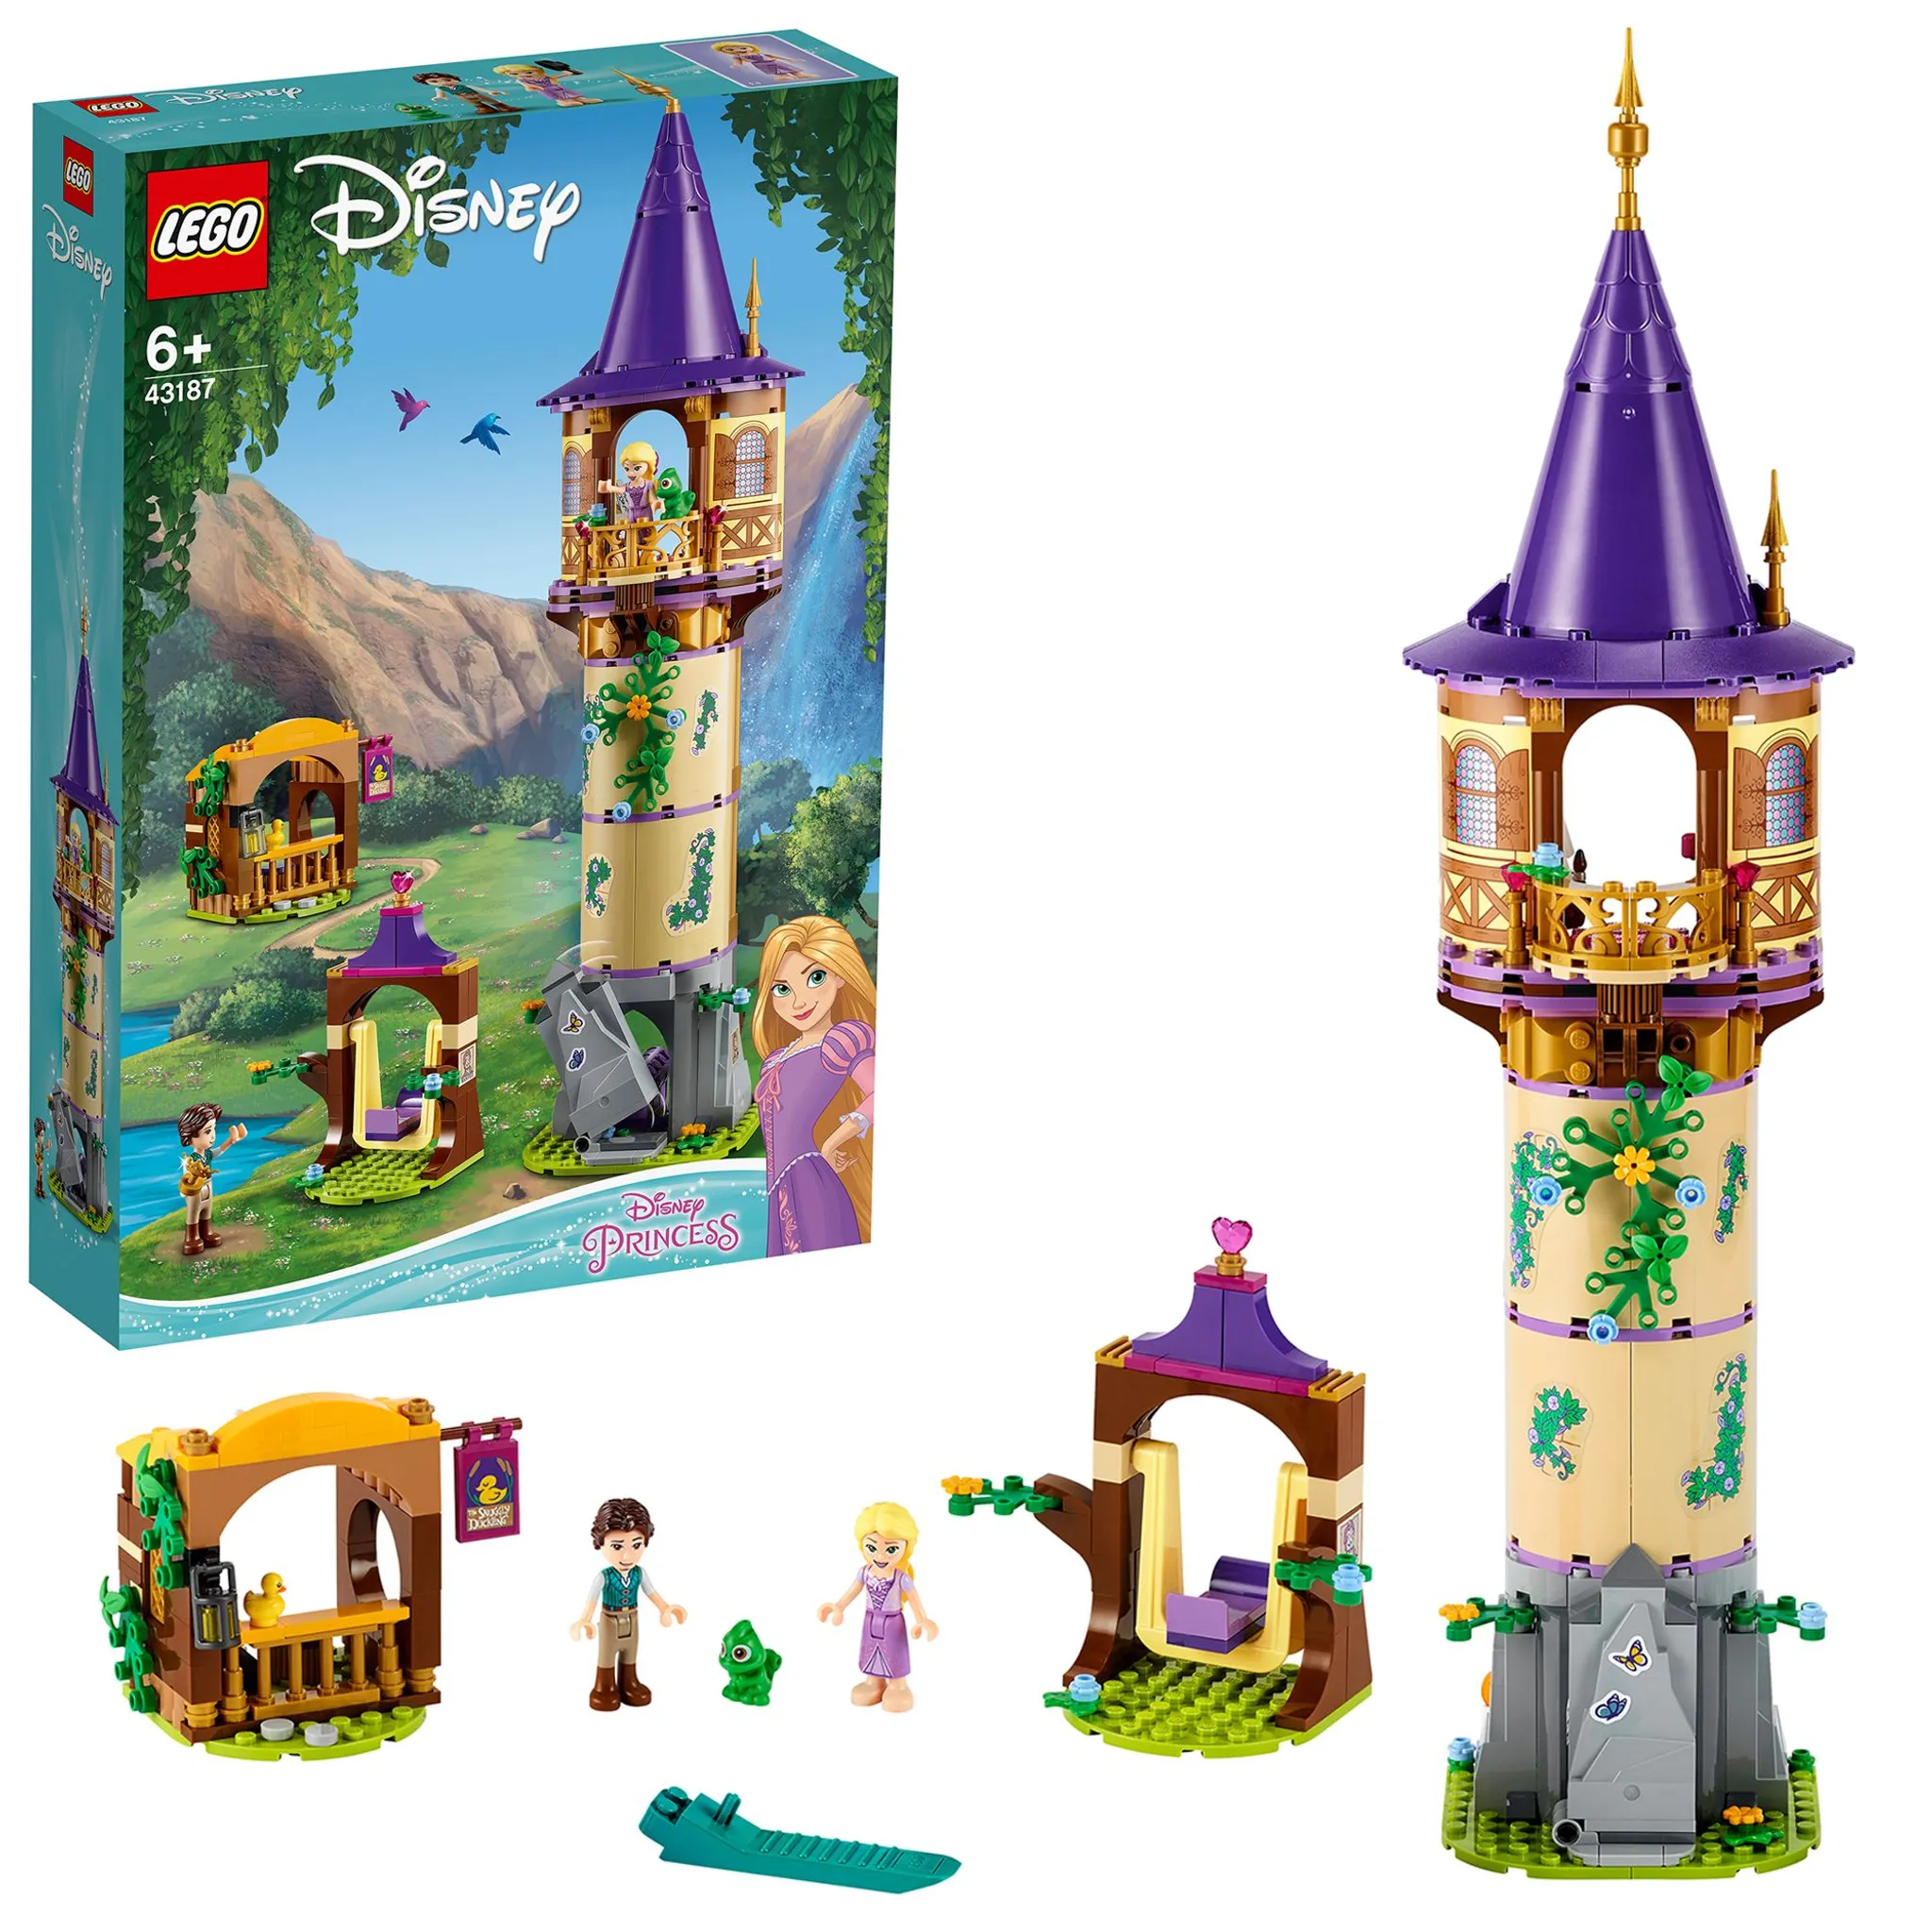 Set 43187 Disney Rapunzels LEGO Turm Princess